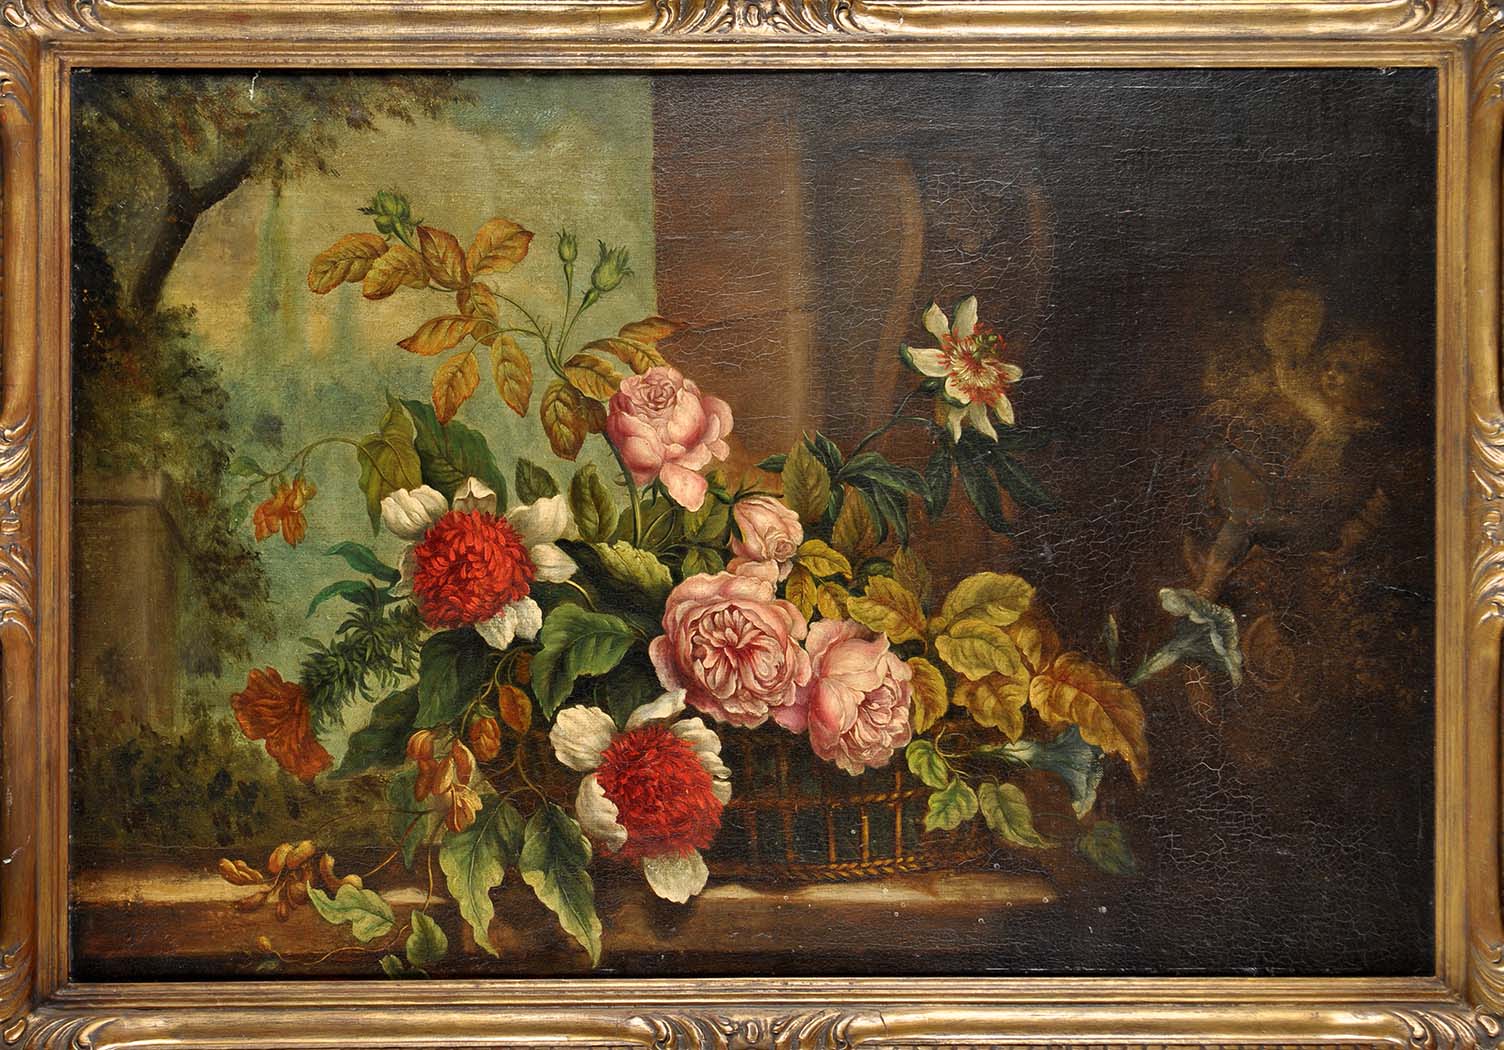 19th Century Dutch School
STILL-LIFE STUDY OF FLOWERS ON A STONE LEDGE
oil on canvas laid on board